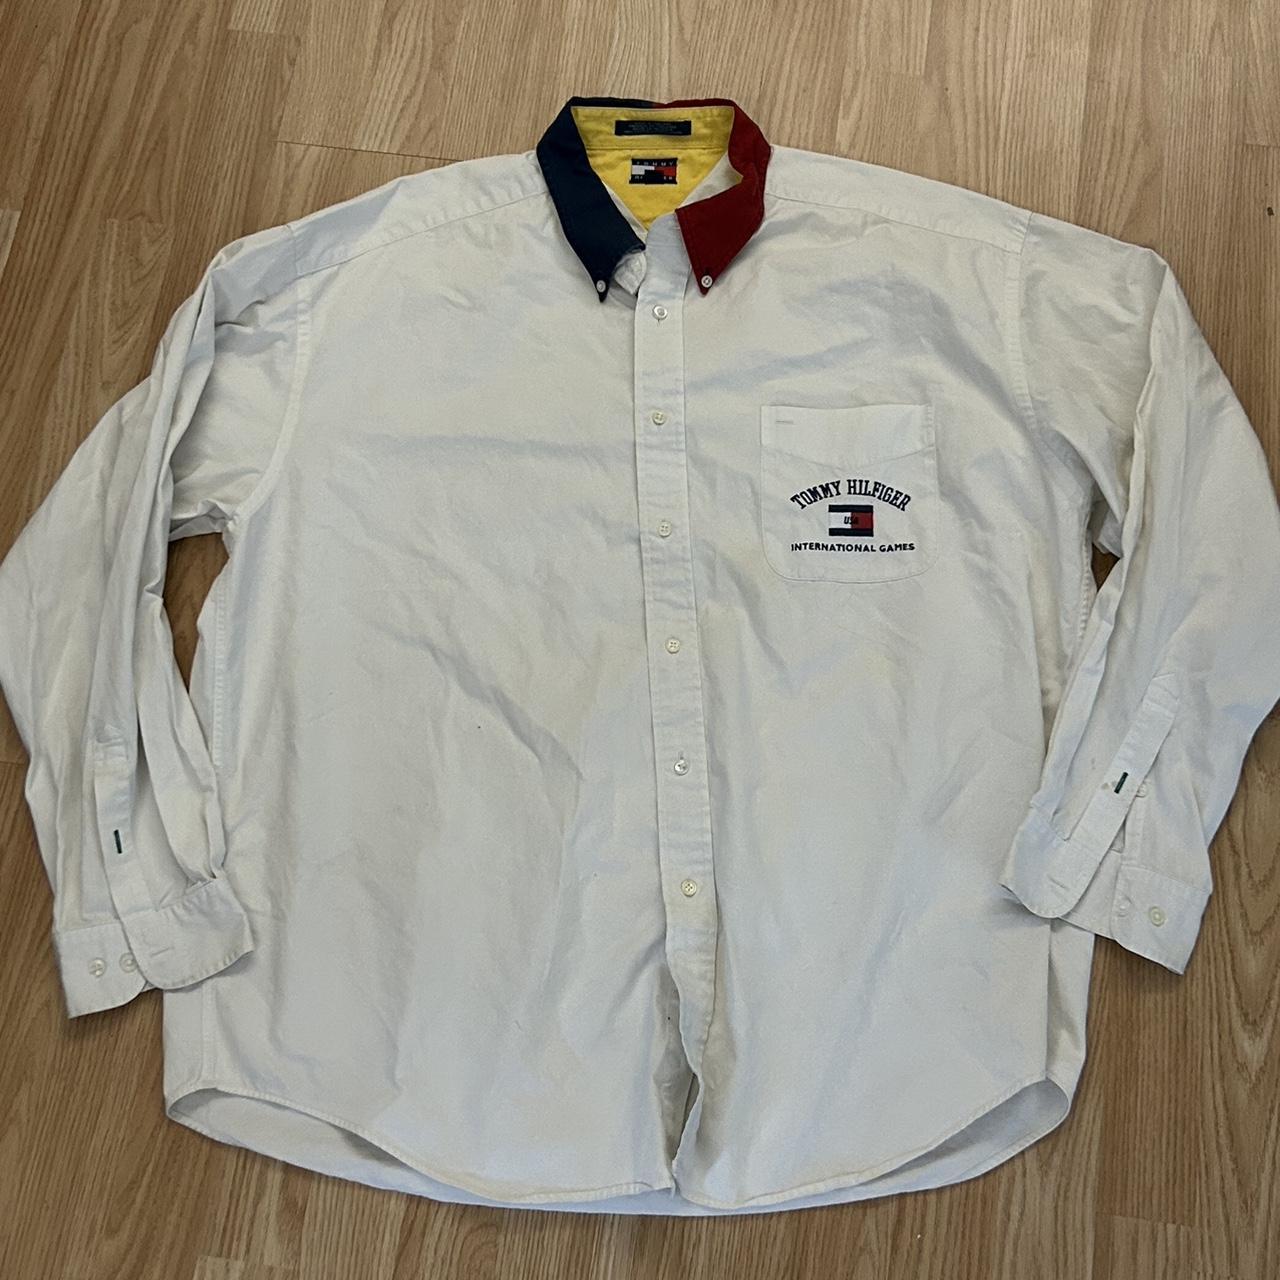 90s Tommy Hilfiger international Games Shirt SMALL 